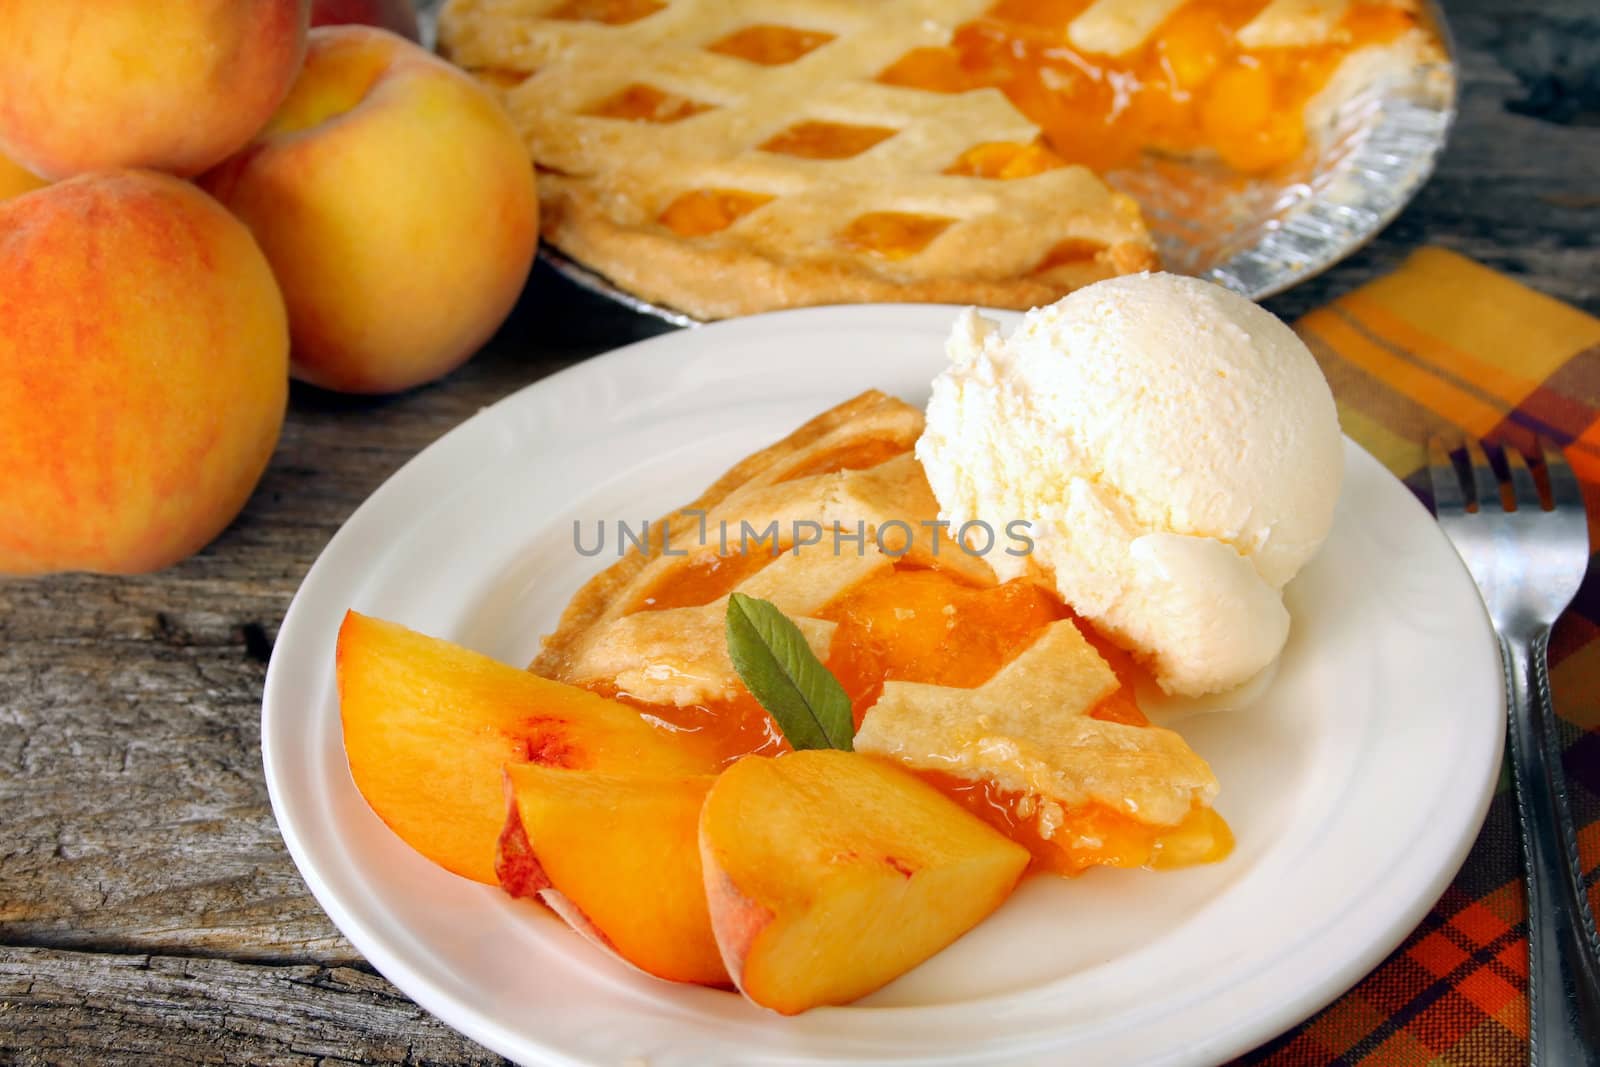 Peach Pie and Ice Cream by thephotoguy